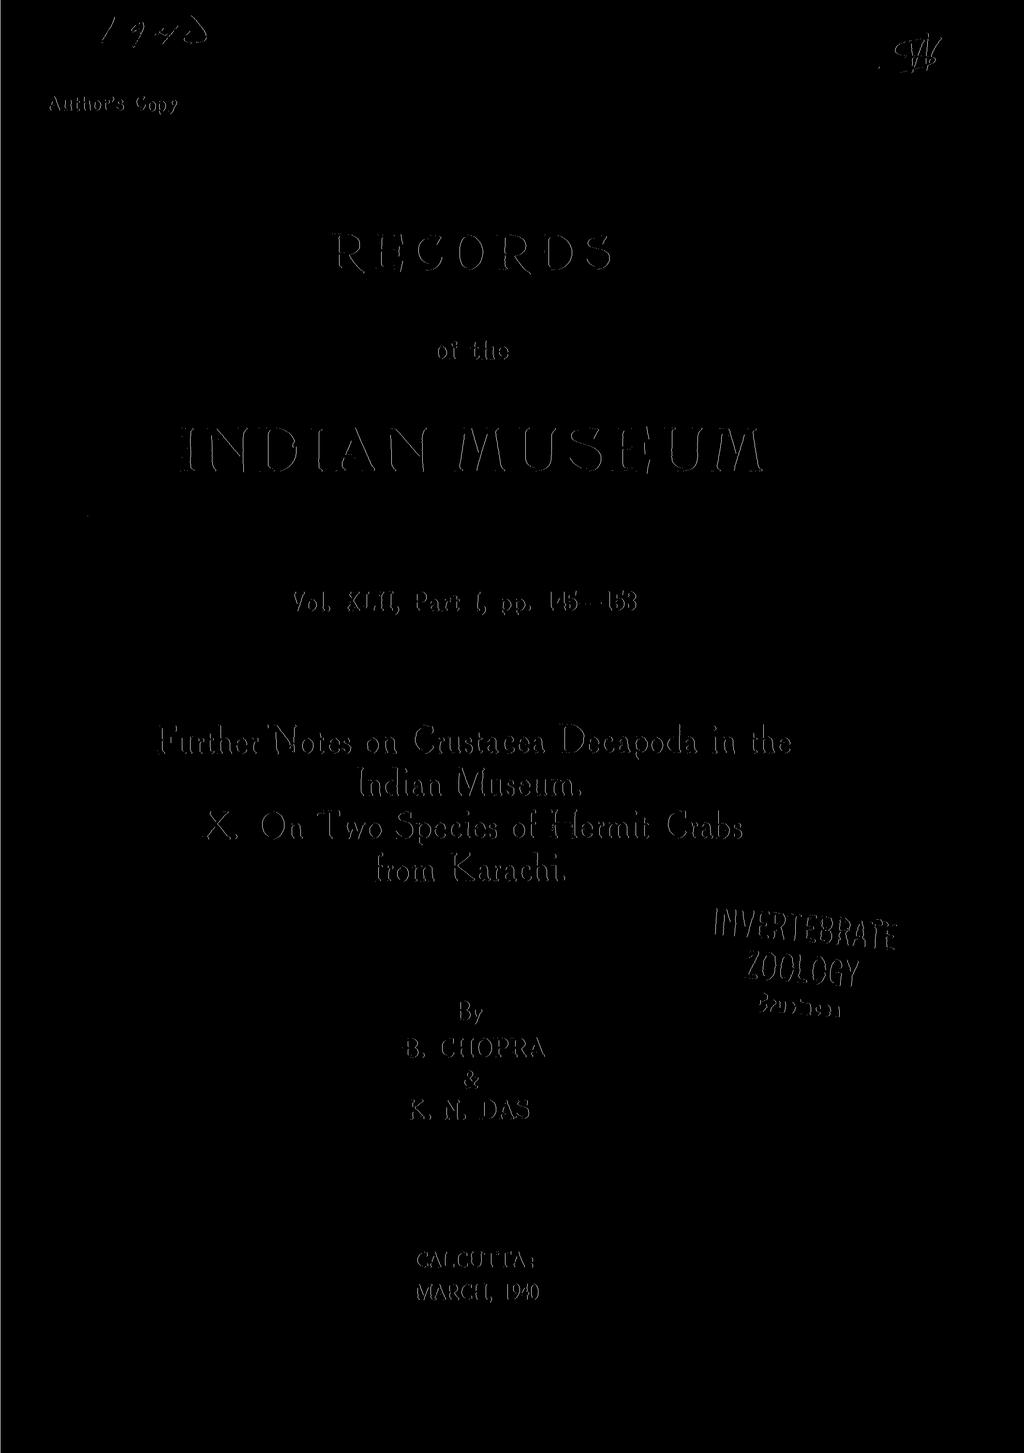 / A / / / i Author's Copy RECORDS of the INDIAN MUSEUM Vol. XLII, Part I, pp.